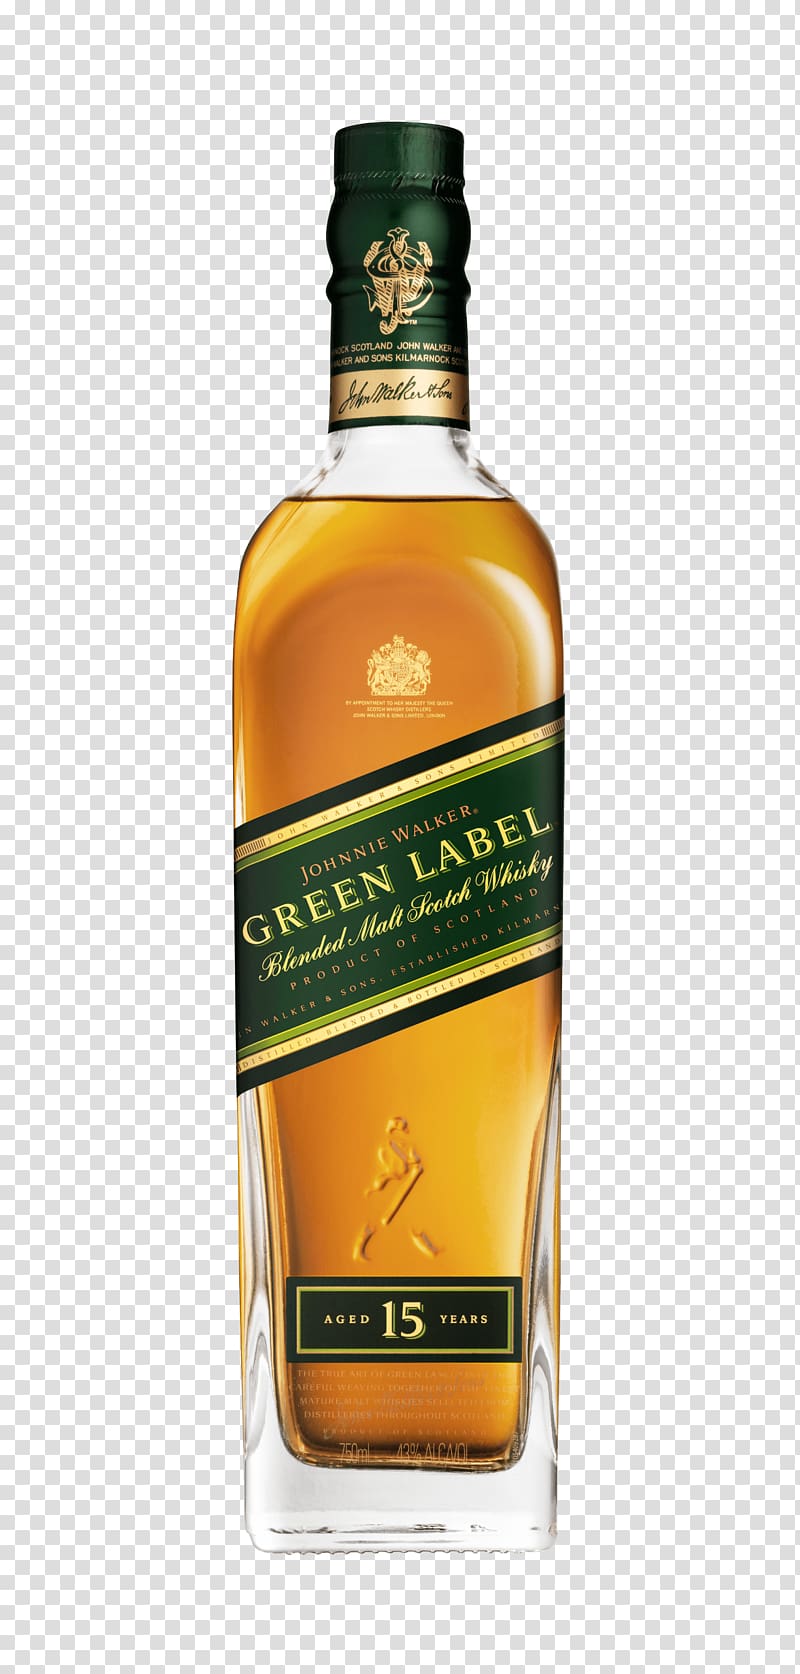 Blended whiskey Single malt whisky Scotch whisky Blended malt whisky, whisky transparent background PNG clipart